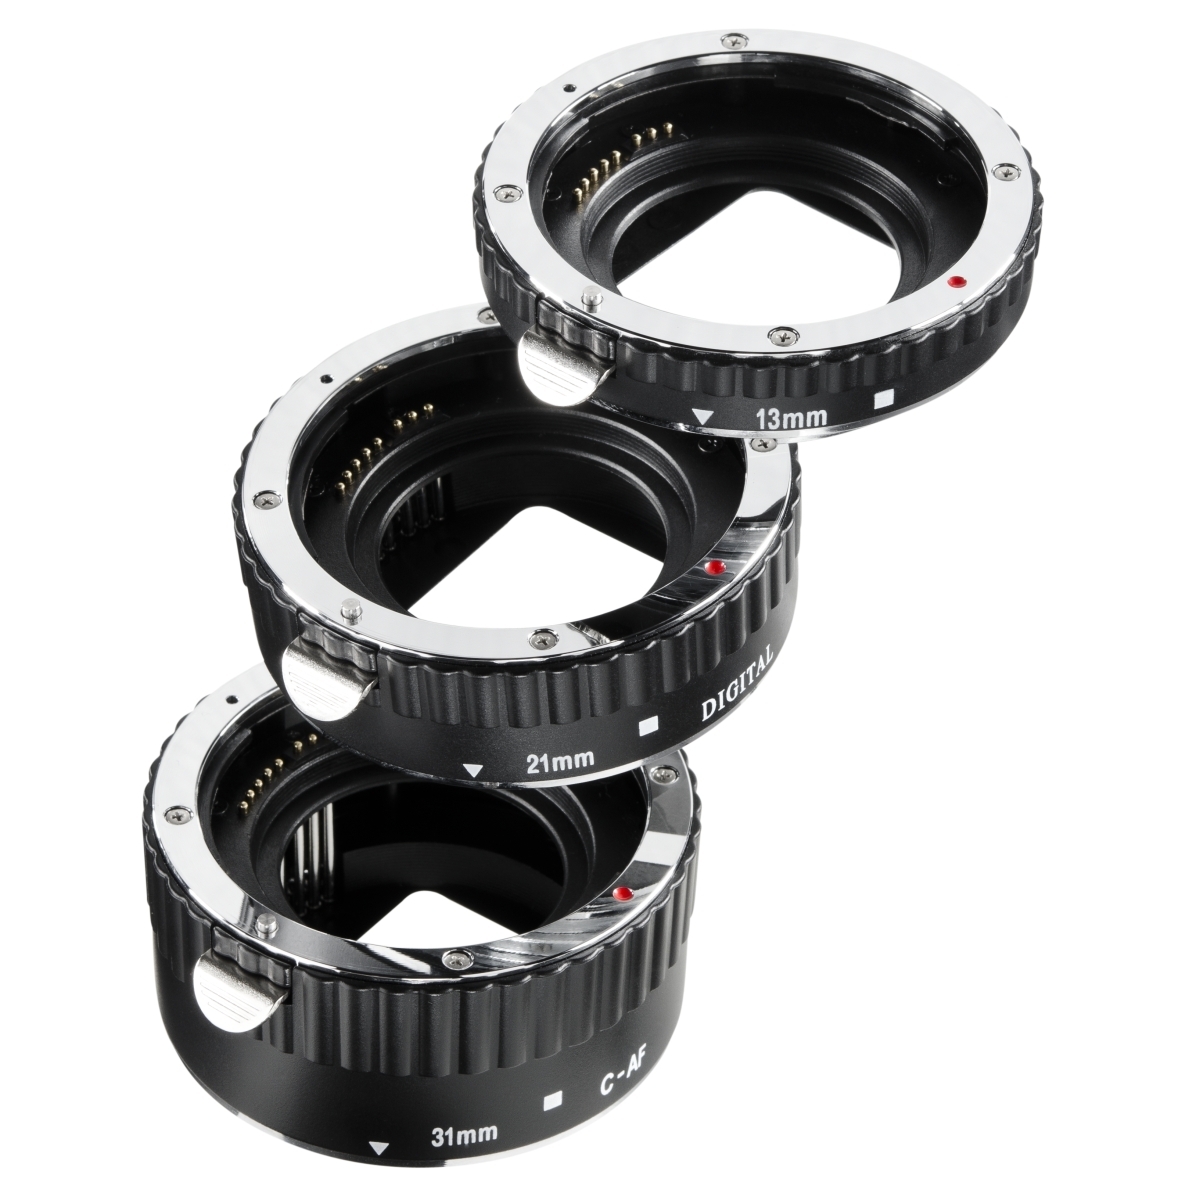 Walimex Spacer Ring Set for Nikon